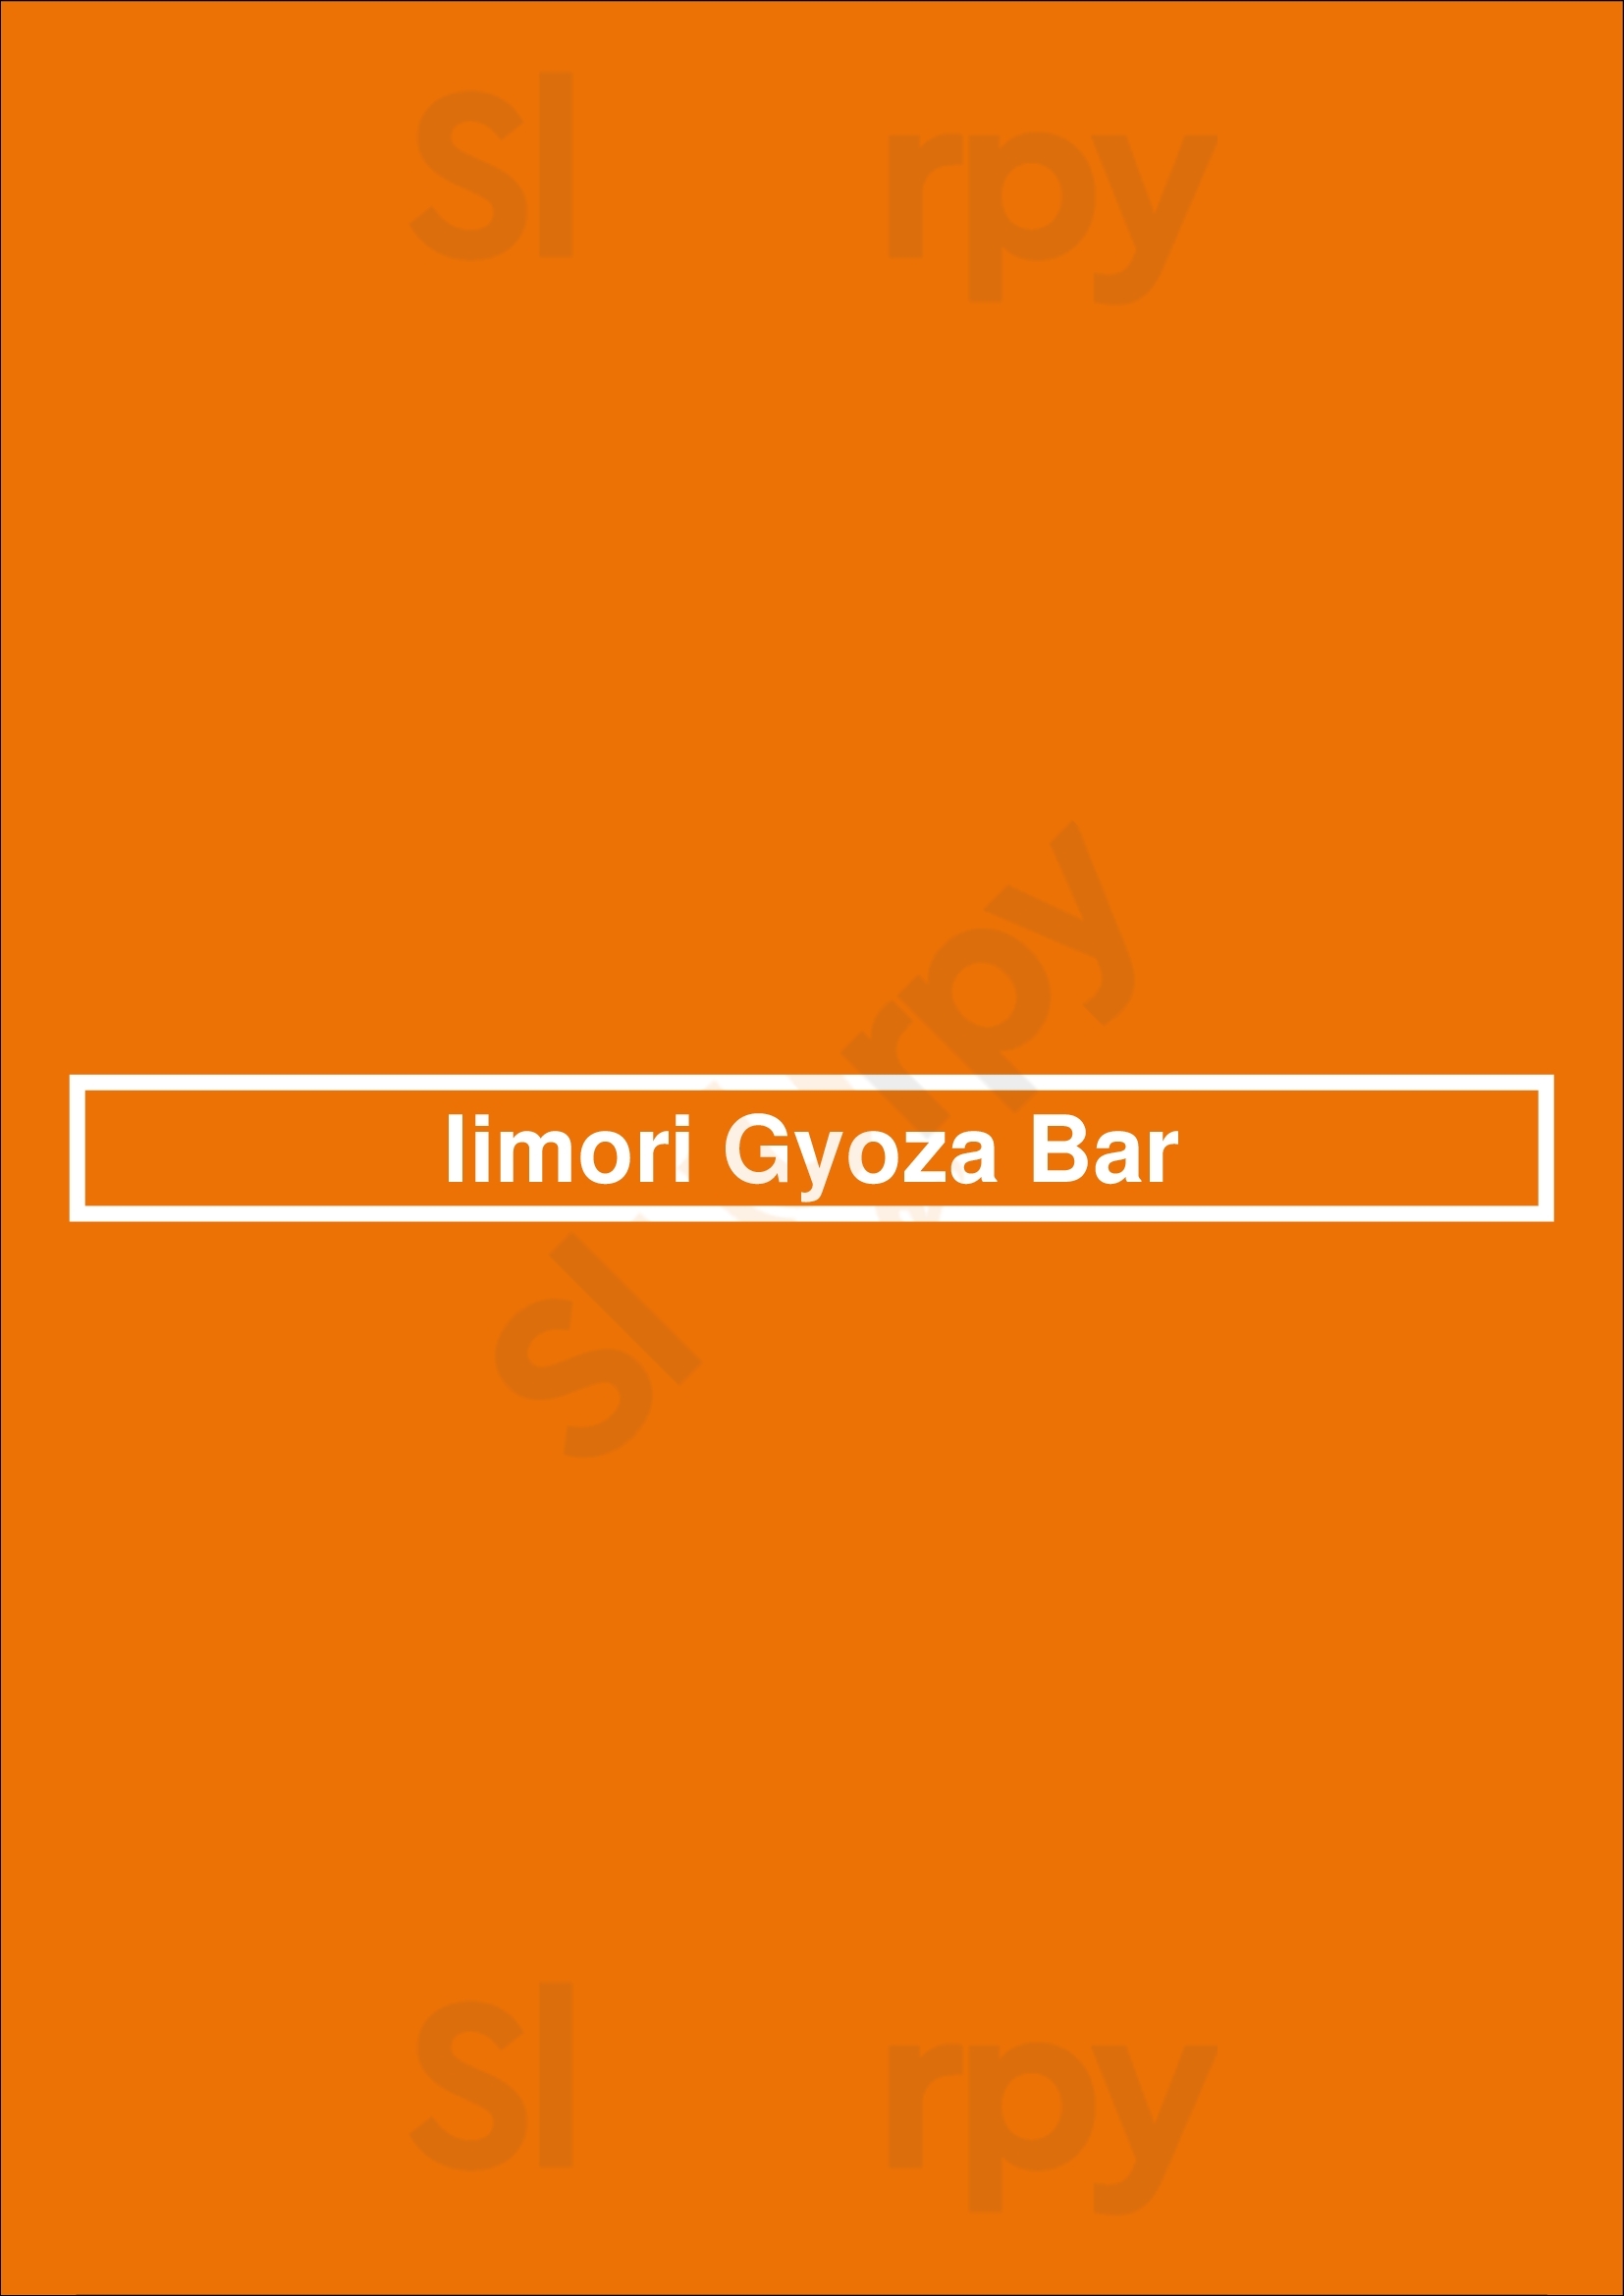 Iimori Gyoza Bar Frankfurt am Main Menu - 1